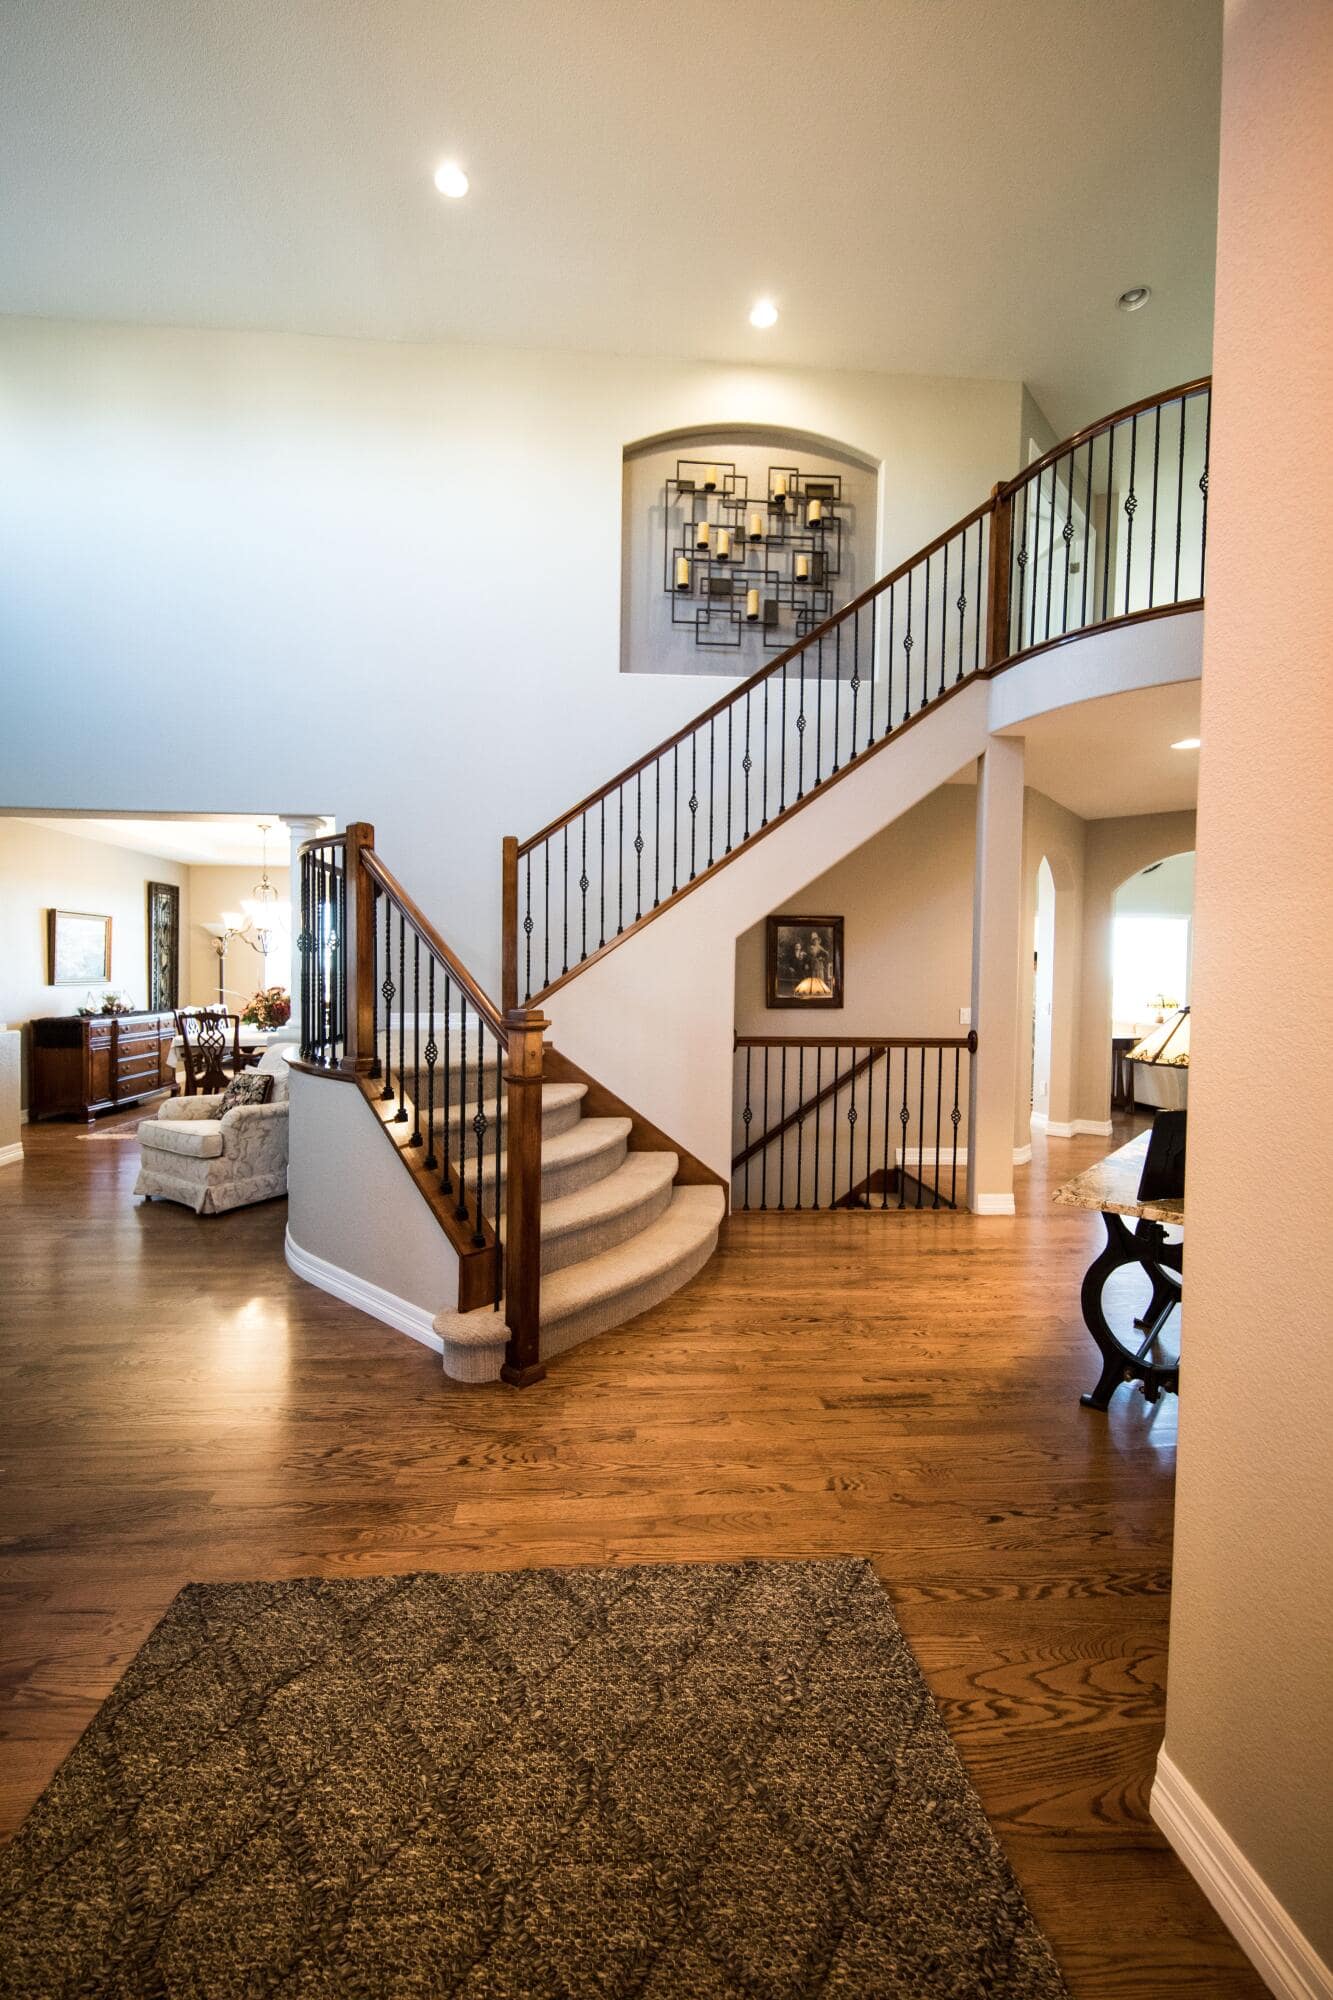 How Often Should a Landlord Inspect Rental Property in Denver, CO?